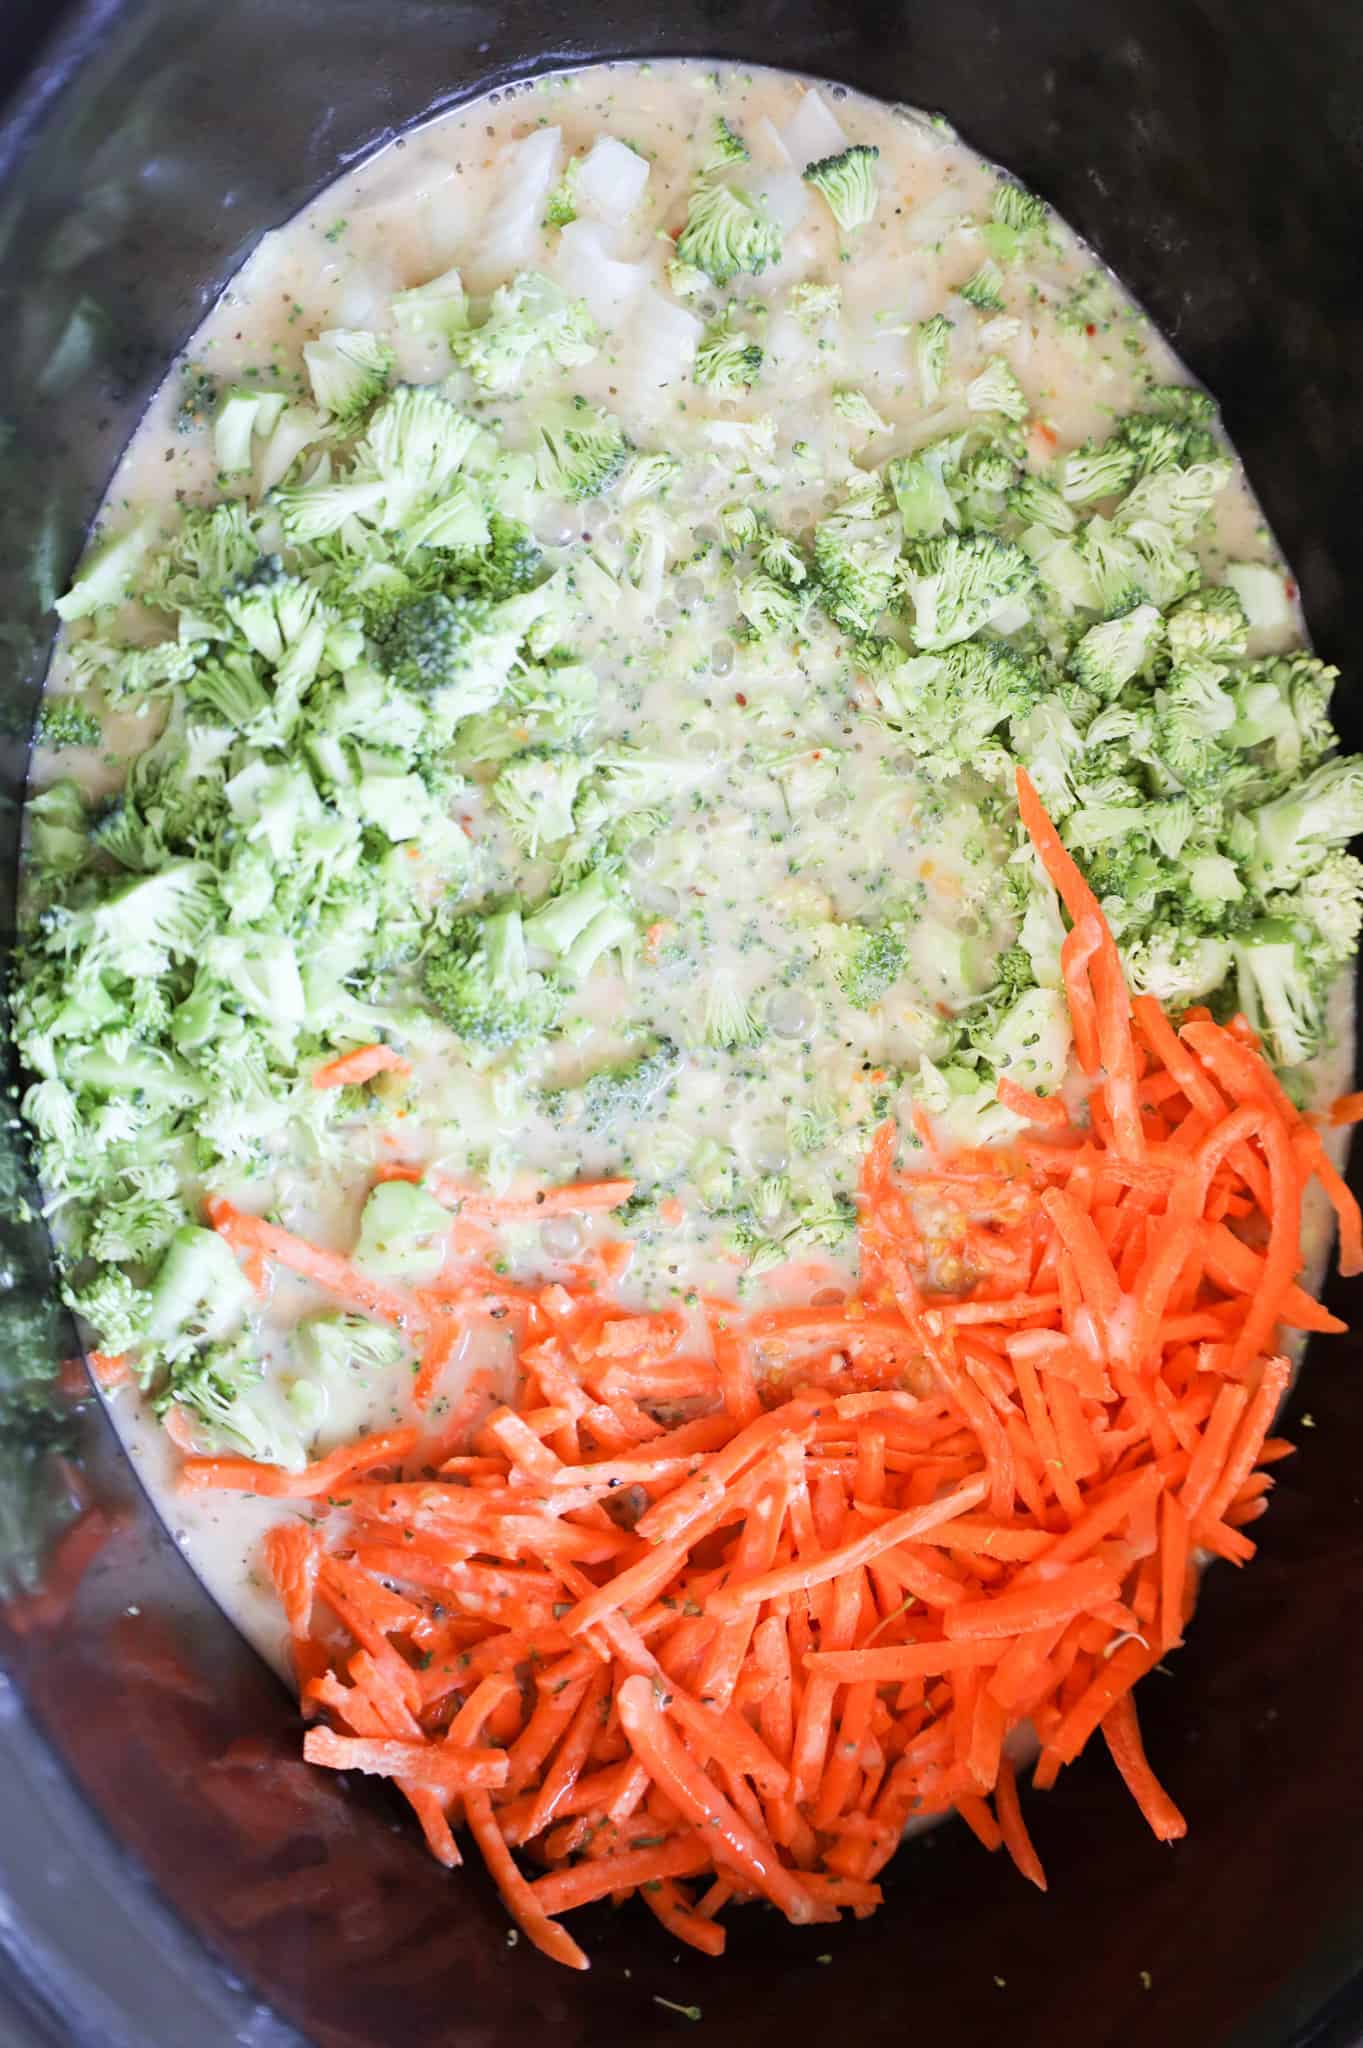 broccoli florets, matchstick carrots and soup mixture in a crock pot